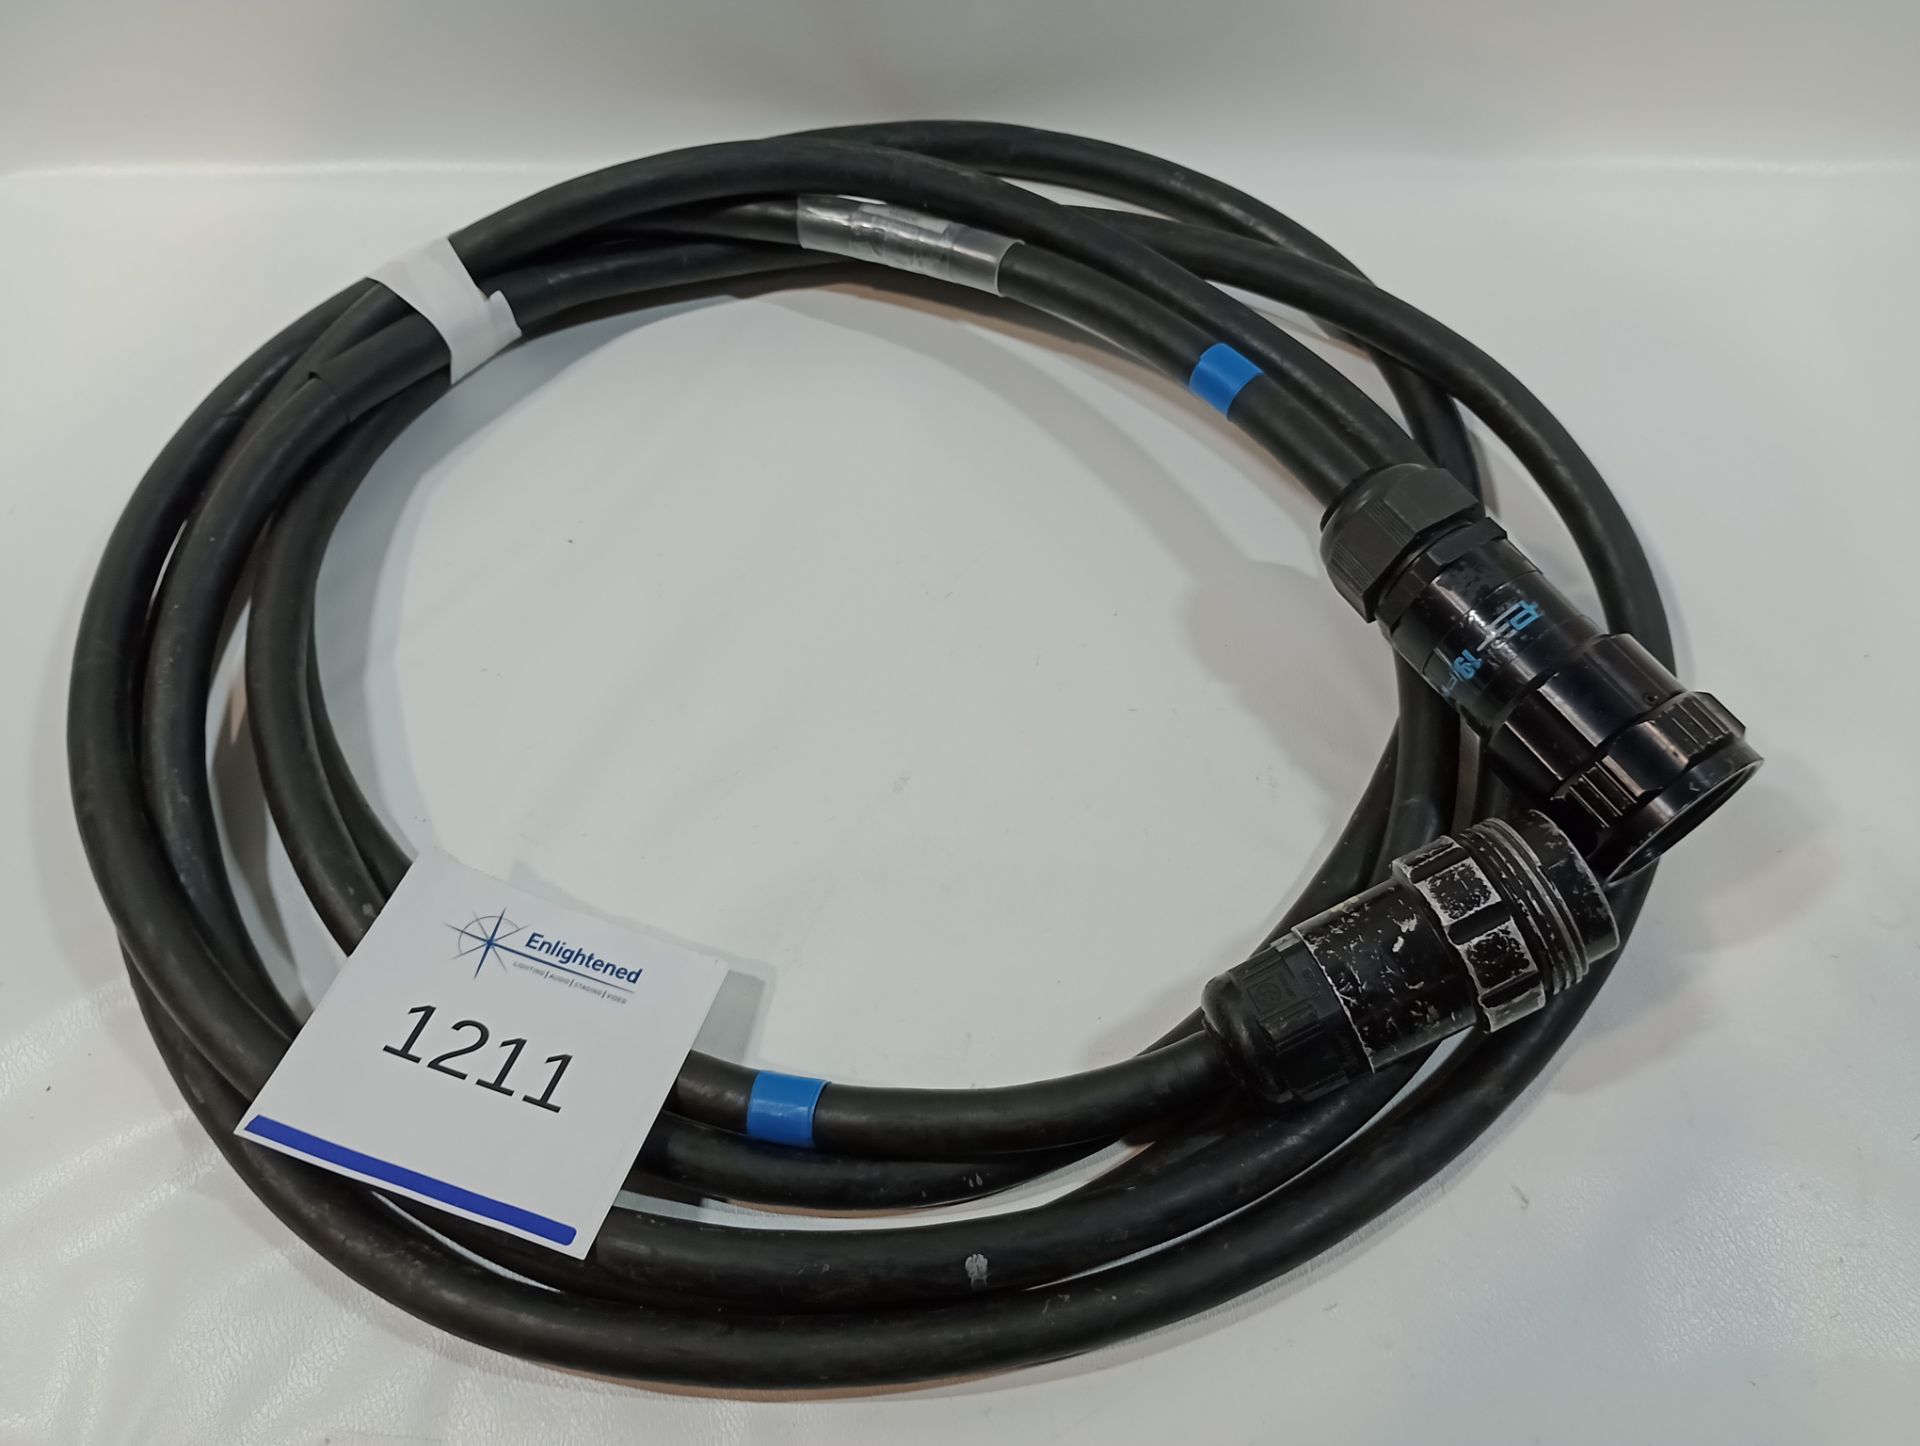 Socapex 5m 1.5mm Cable